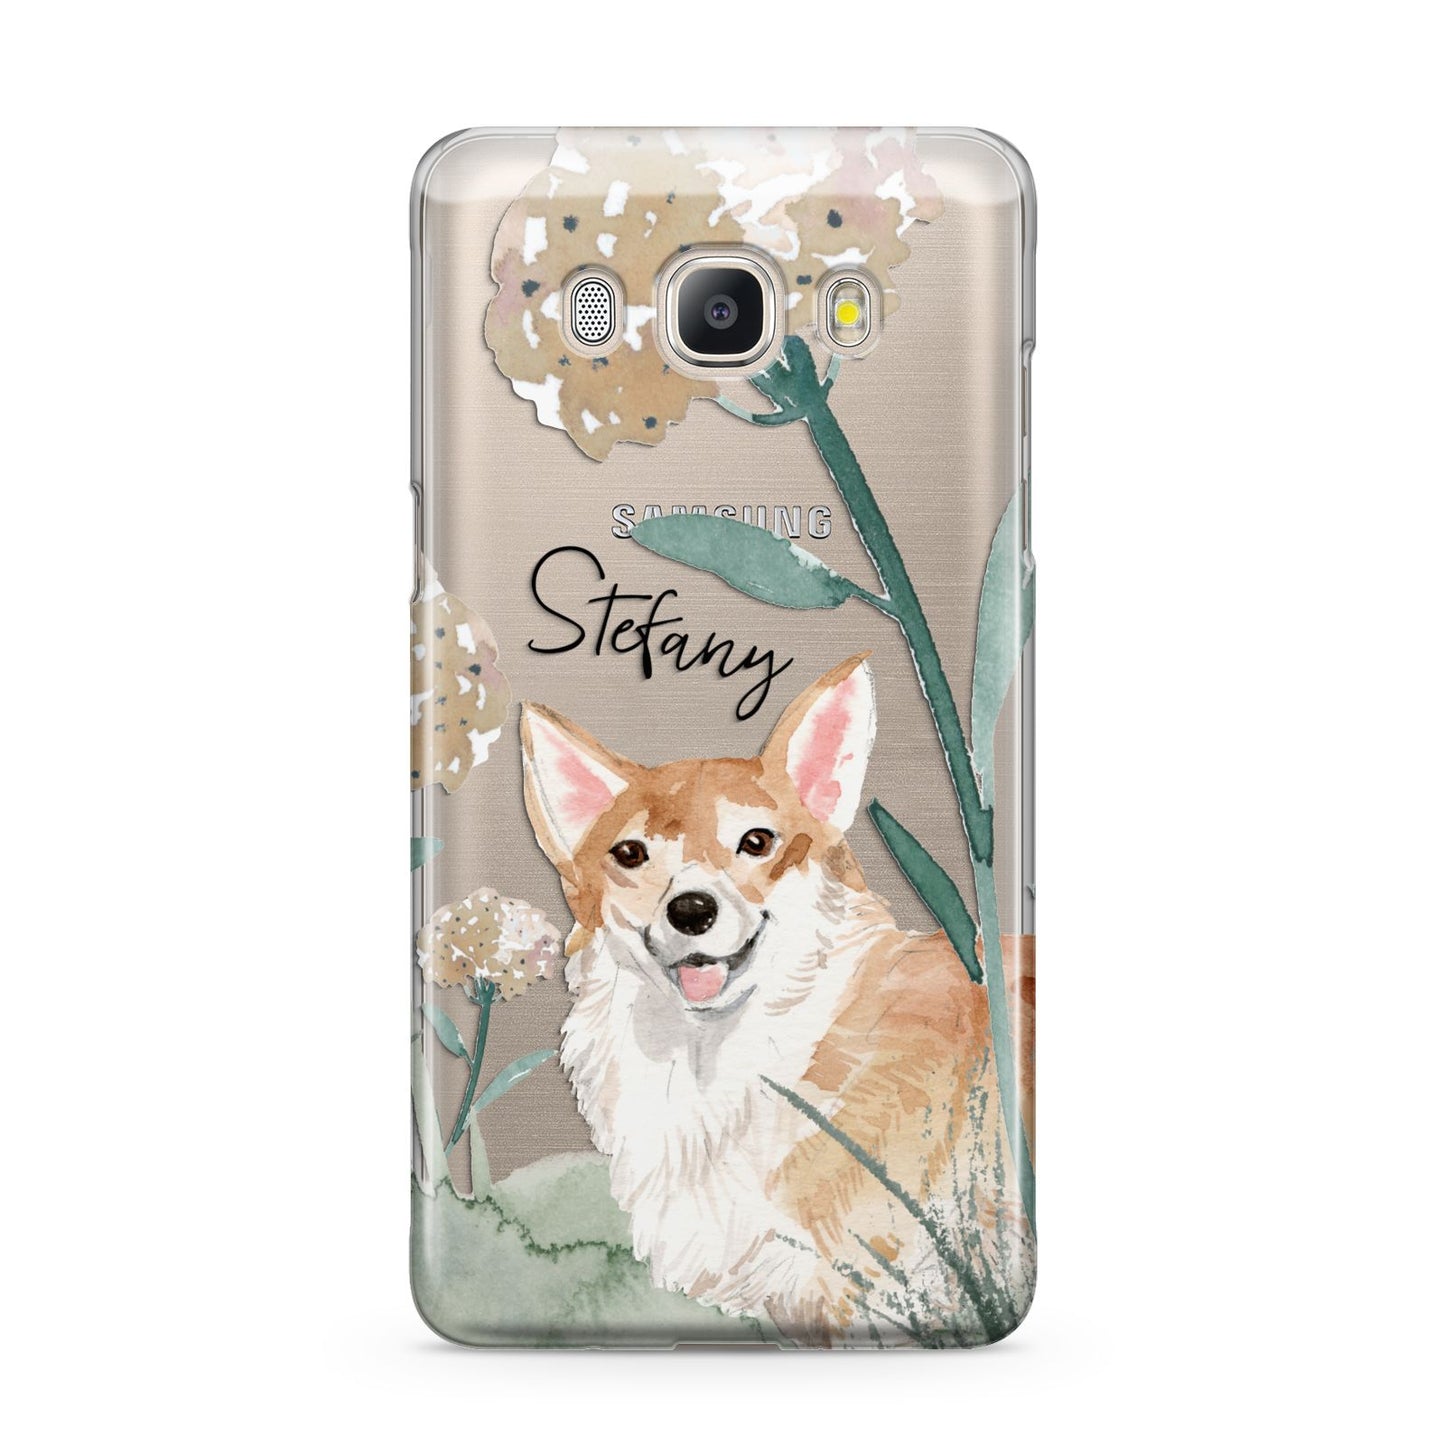 Personalised Welsh Corgi Dog Samsung Galaxy J5 2016 Case